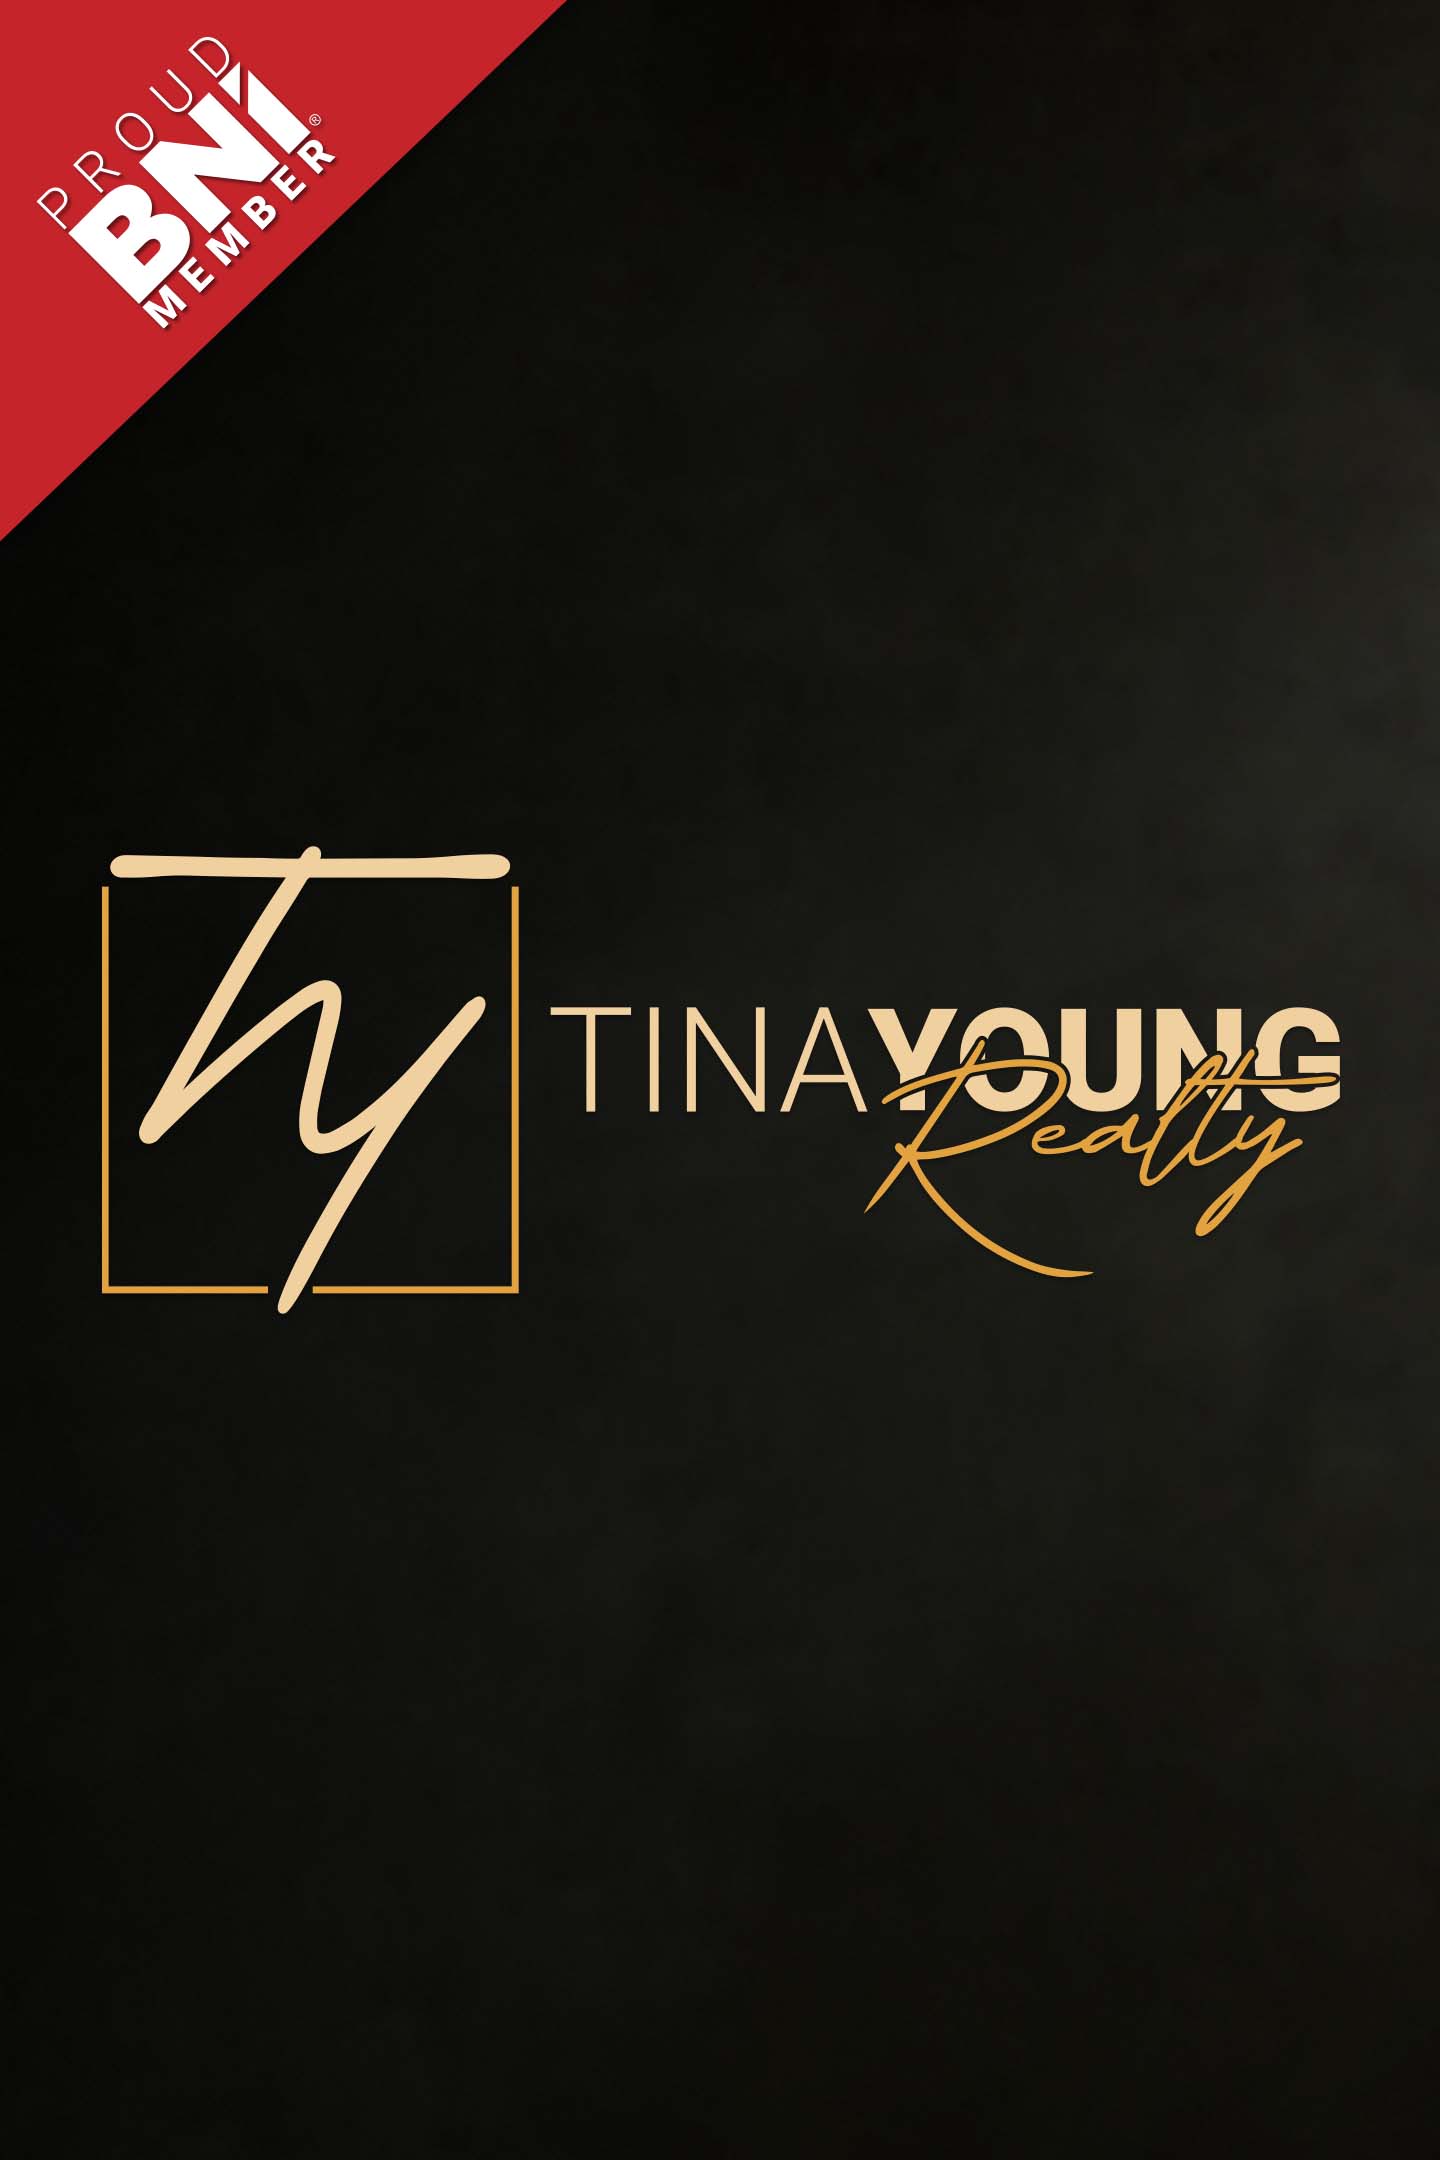 Tina Young Realty - Logo